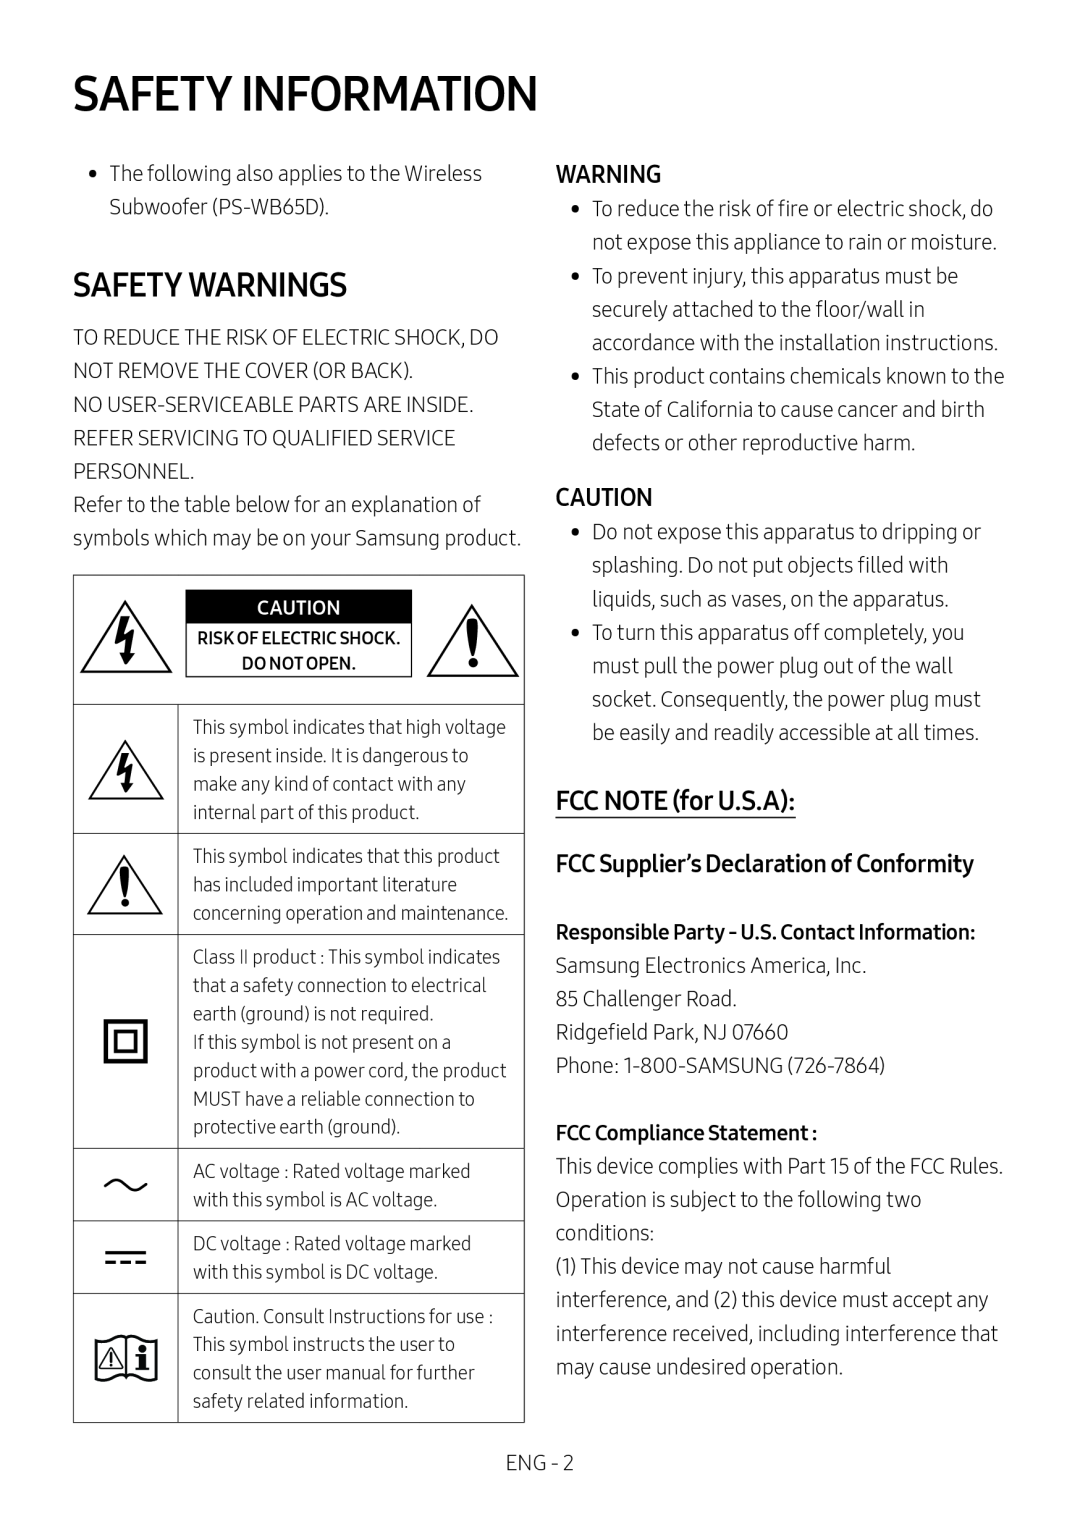 SAFETY WARNINGS Standard HW-B63C